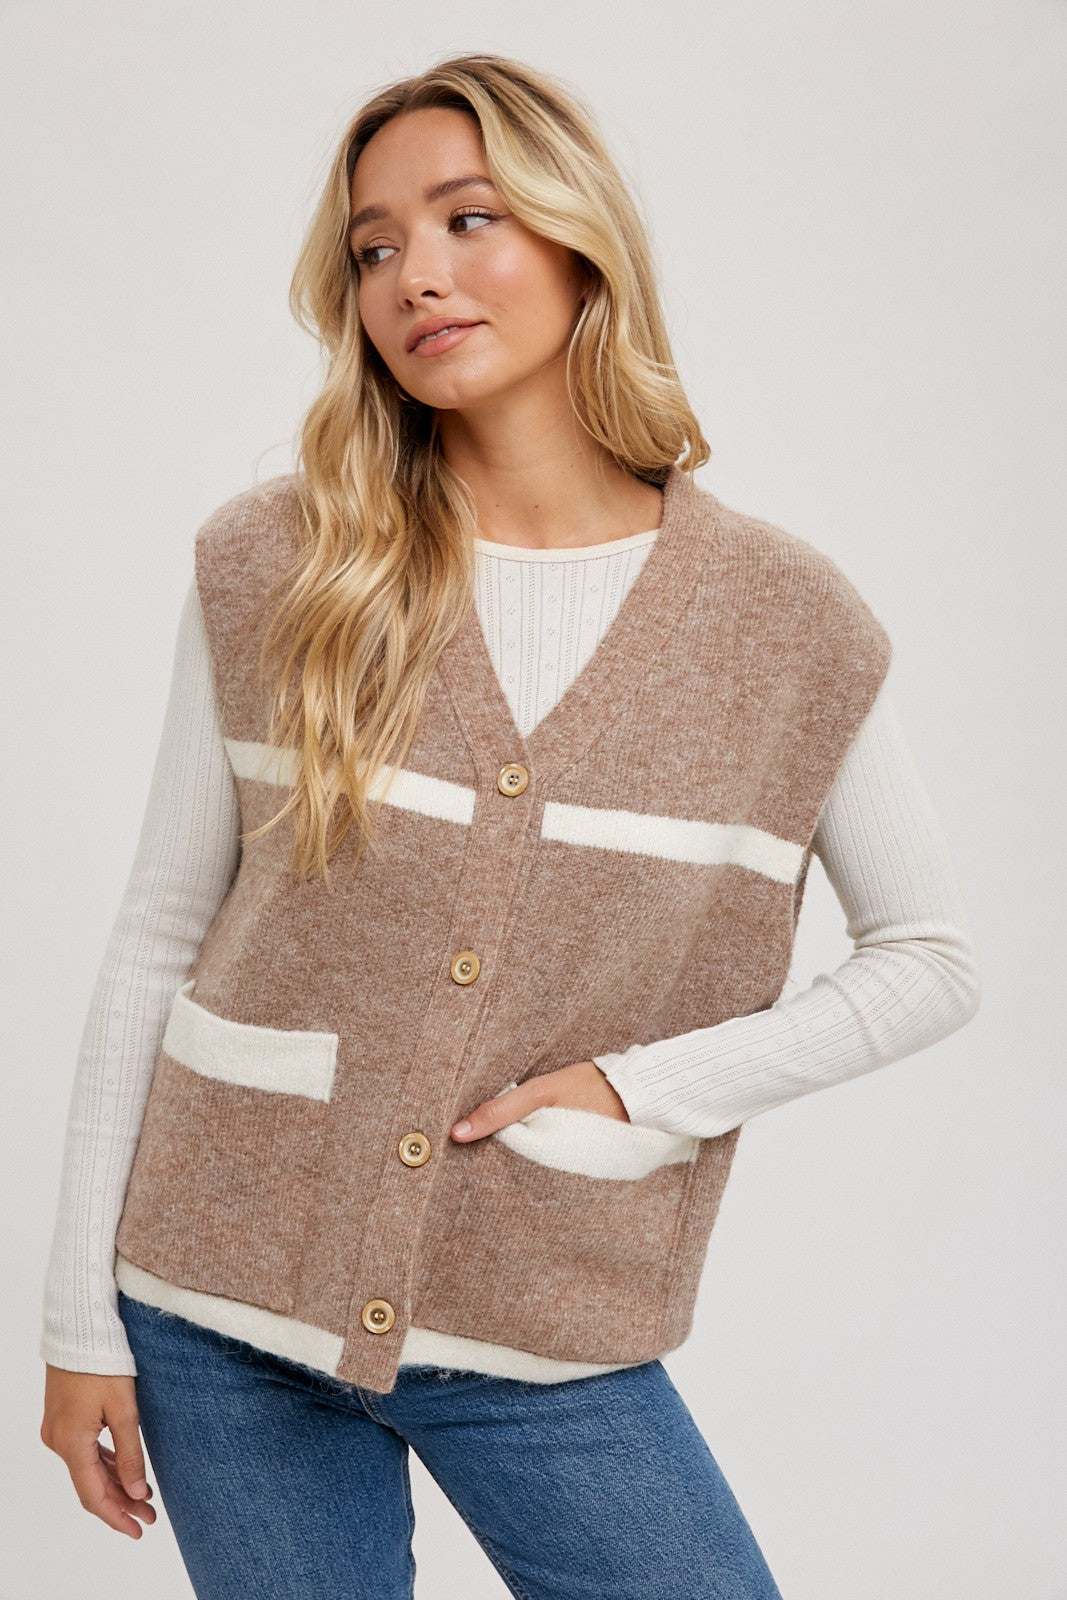 Stripe Sweater Vest